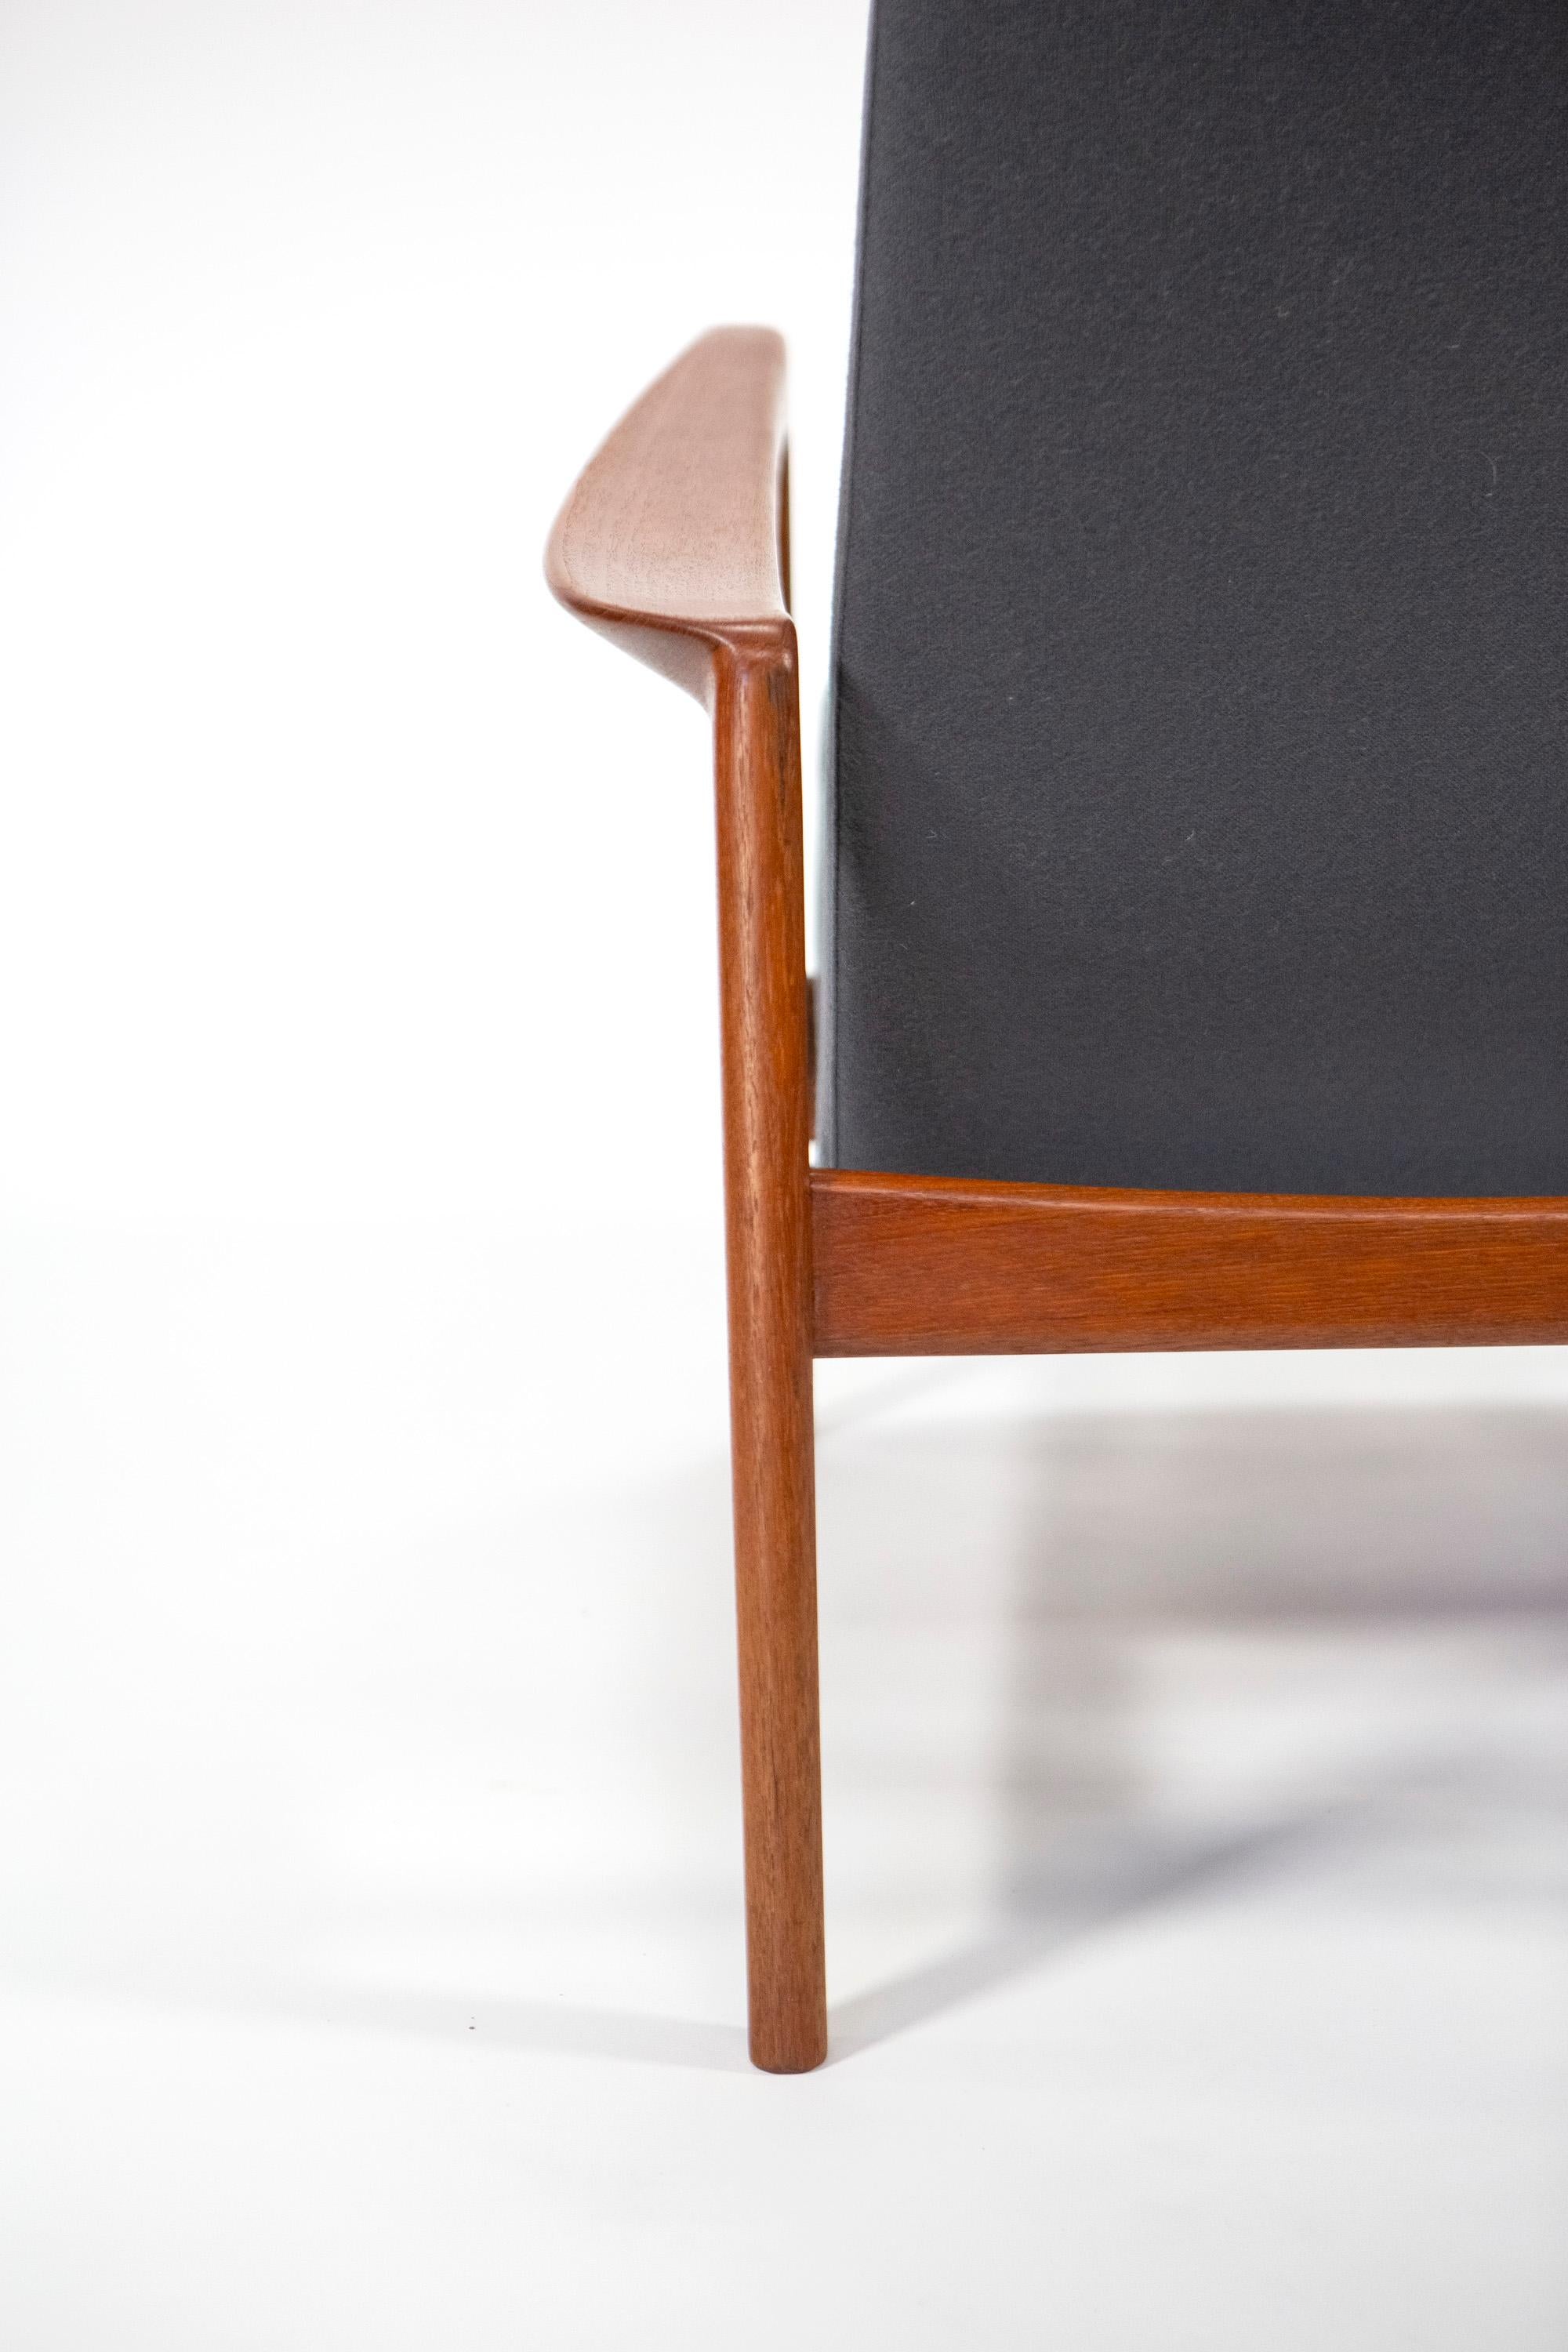 Folke Ohlsson teak 'Duxiesta' Adjustable Arm Chair by DUX - Sweden 1960's For Sale 8